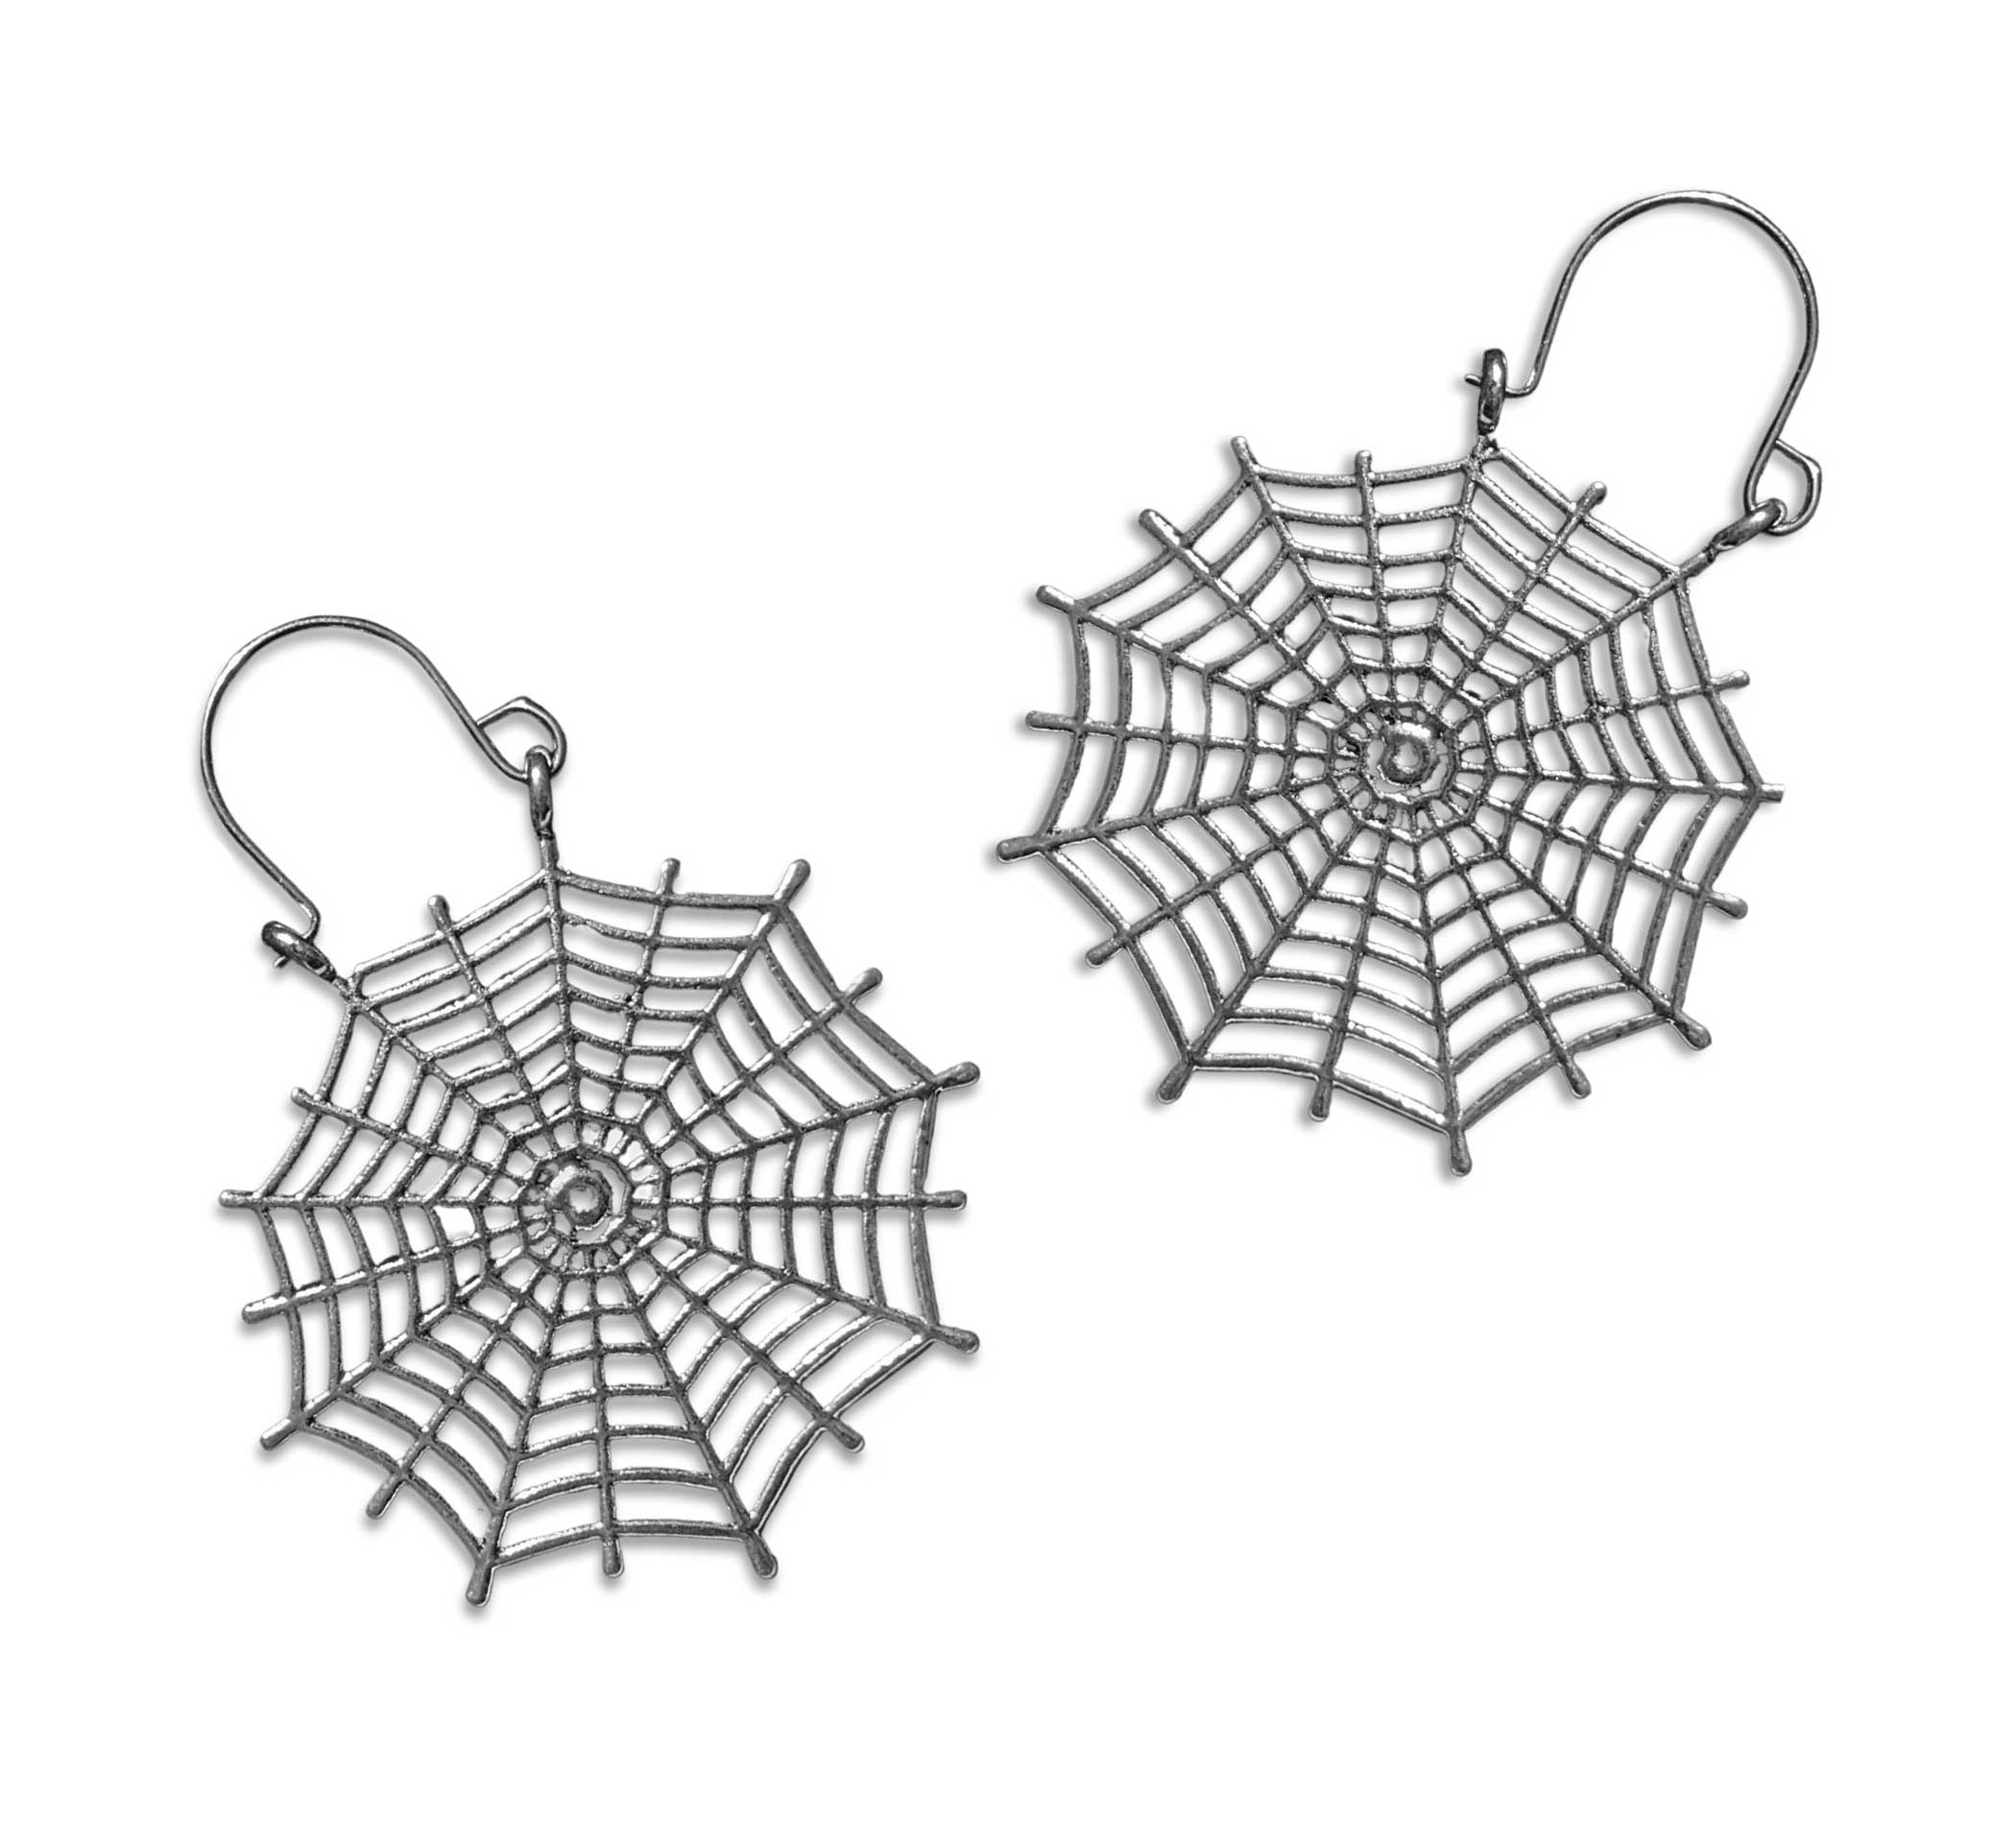 "Thalia" Spiderweb Earrings